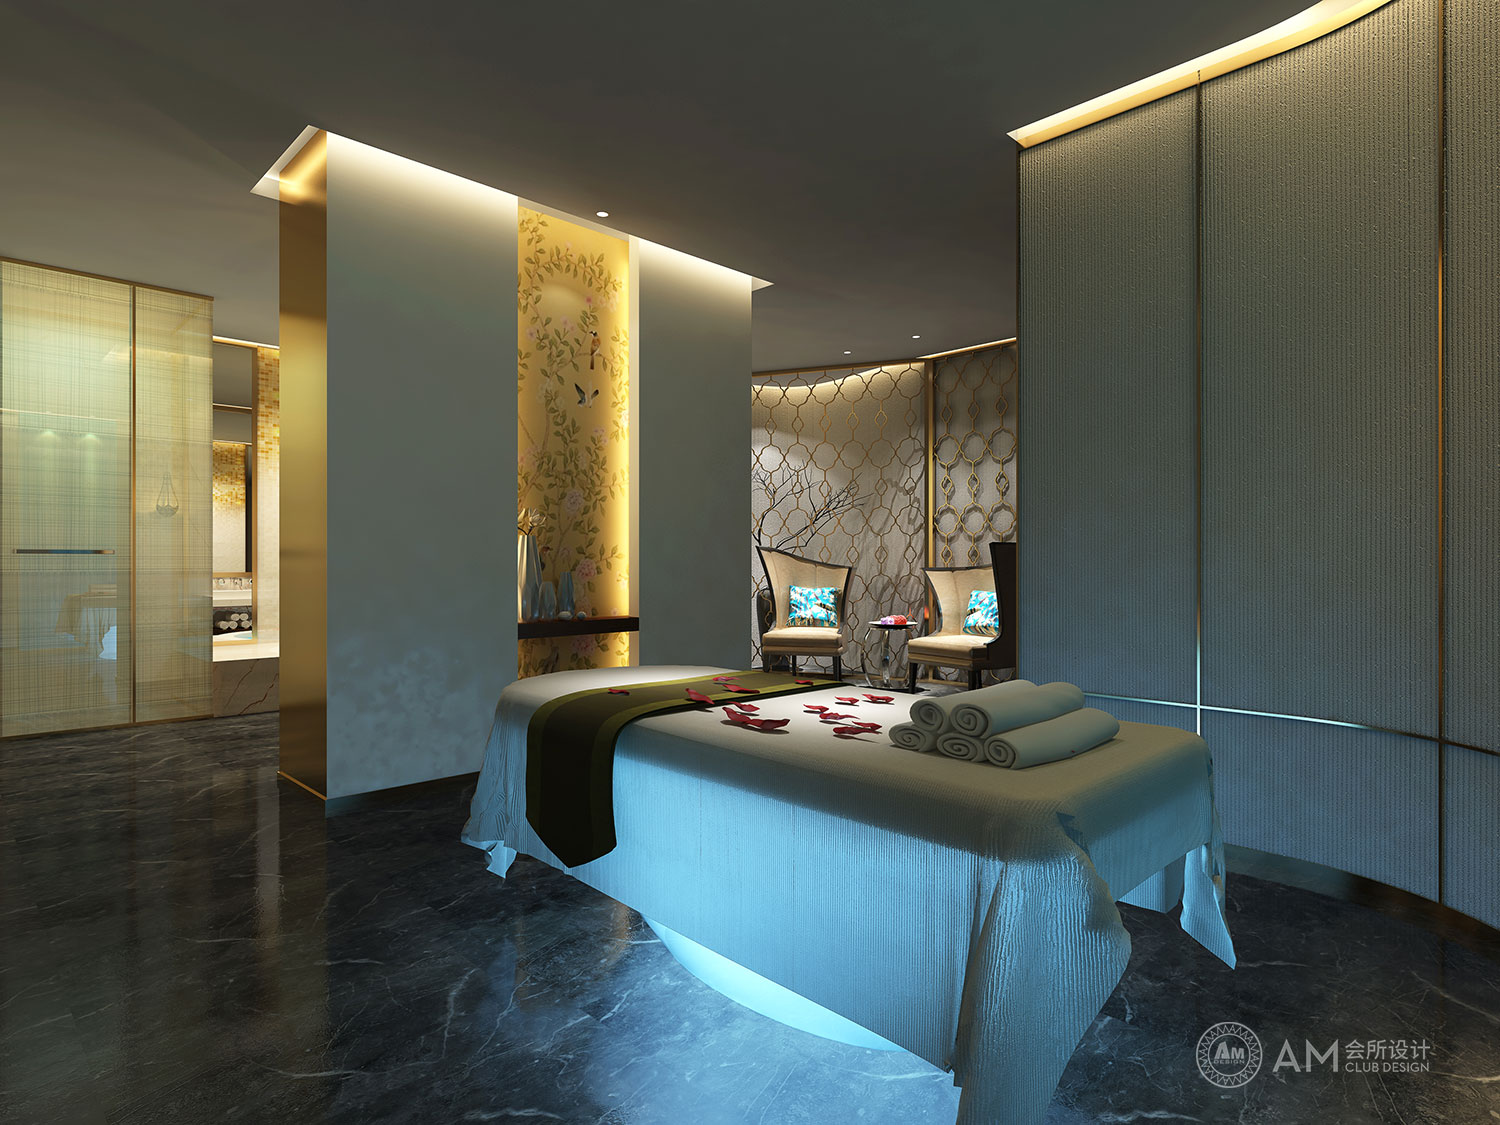 AM DESIGN | Spa room design of ziyihui top club